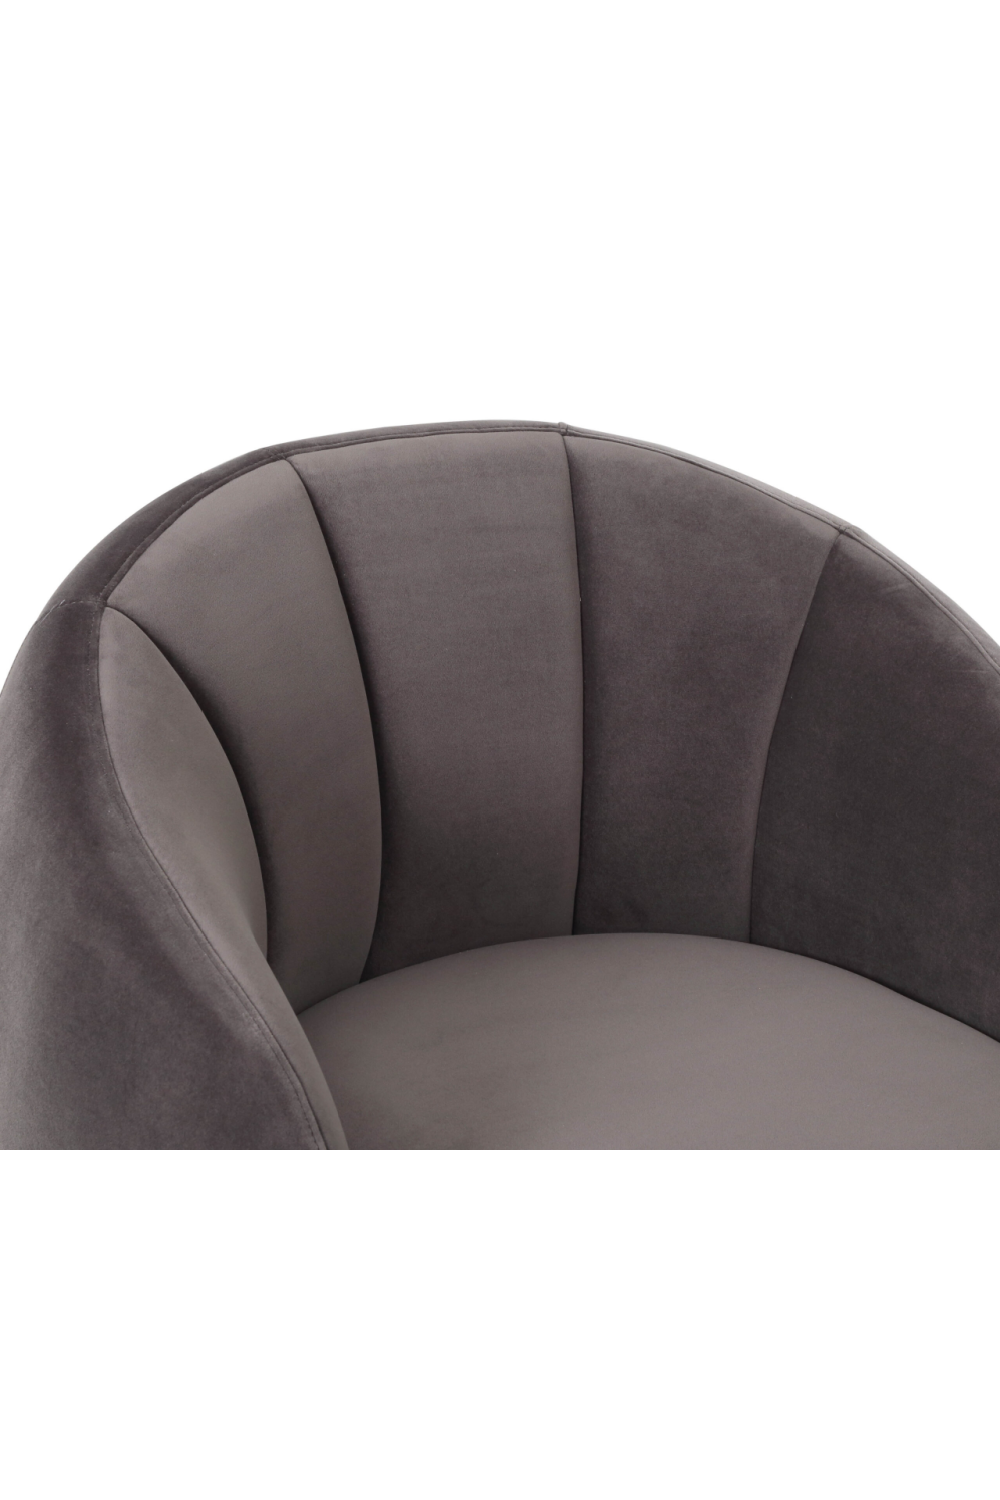 Round Swivel Accent Chair | Liang & Eimil Bulpa | OROA.com